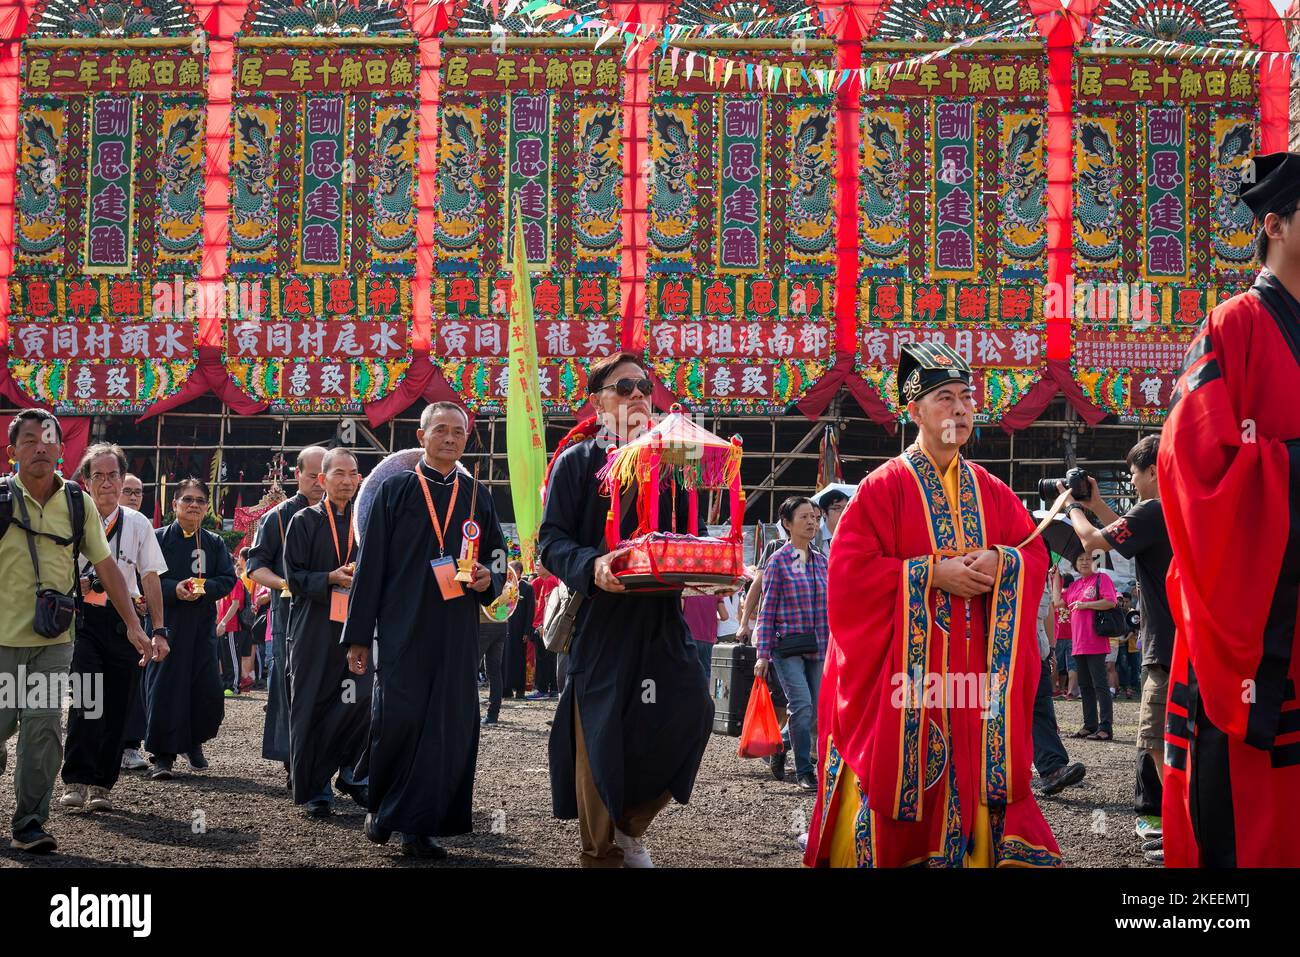 Red-robed Taoist priests lead village elders in a ritual procession across the decennial Da Jiu festival site, Kam Tin, Hong Kong, 2015 Stock Photo